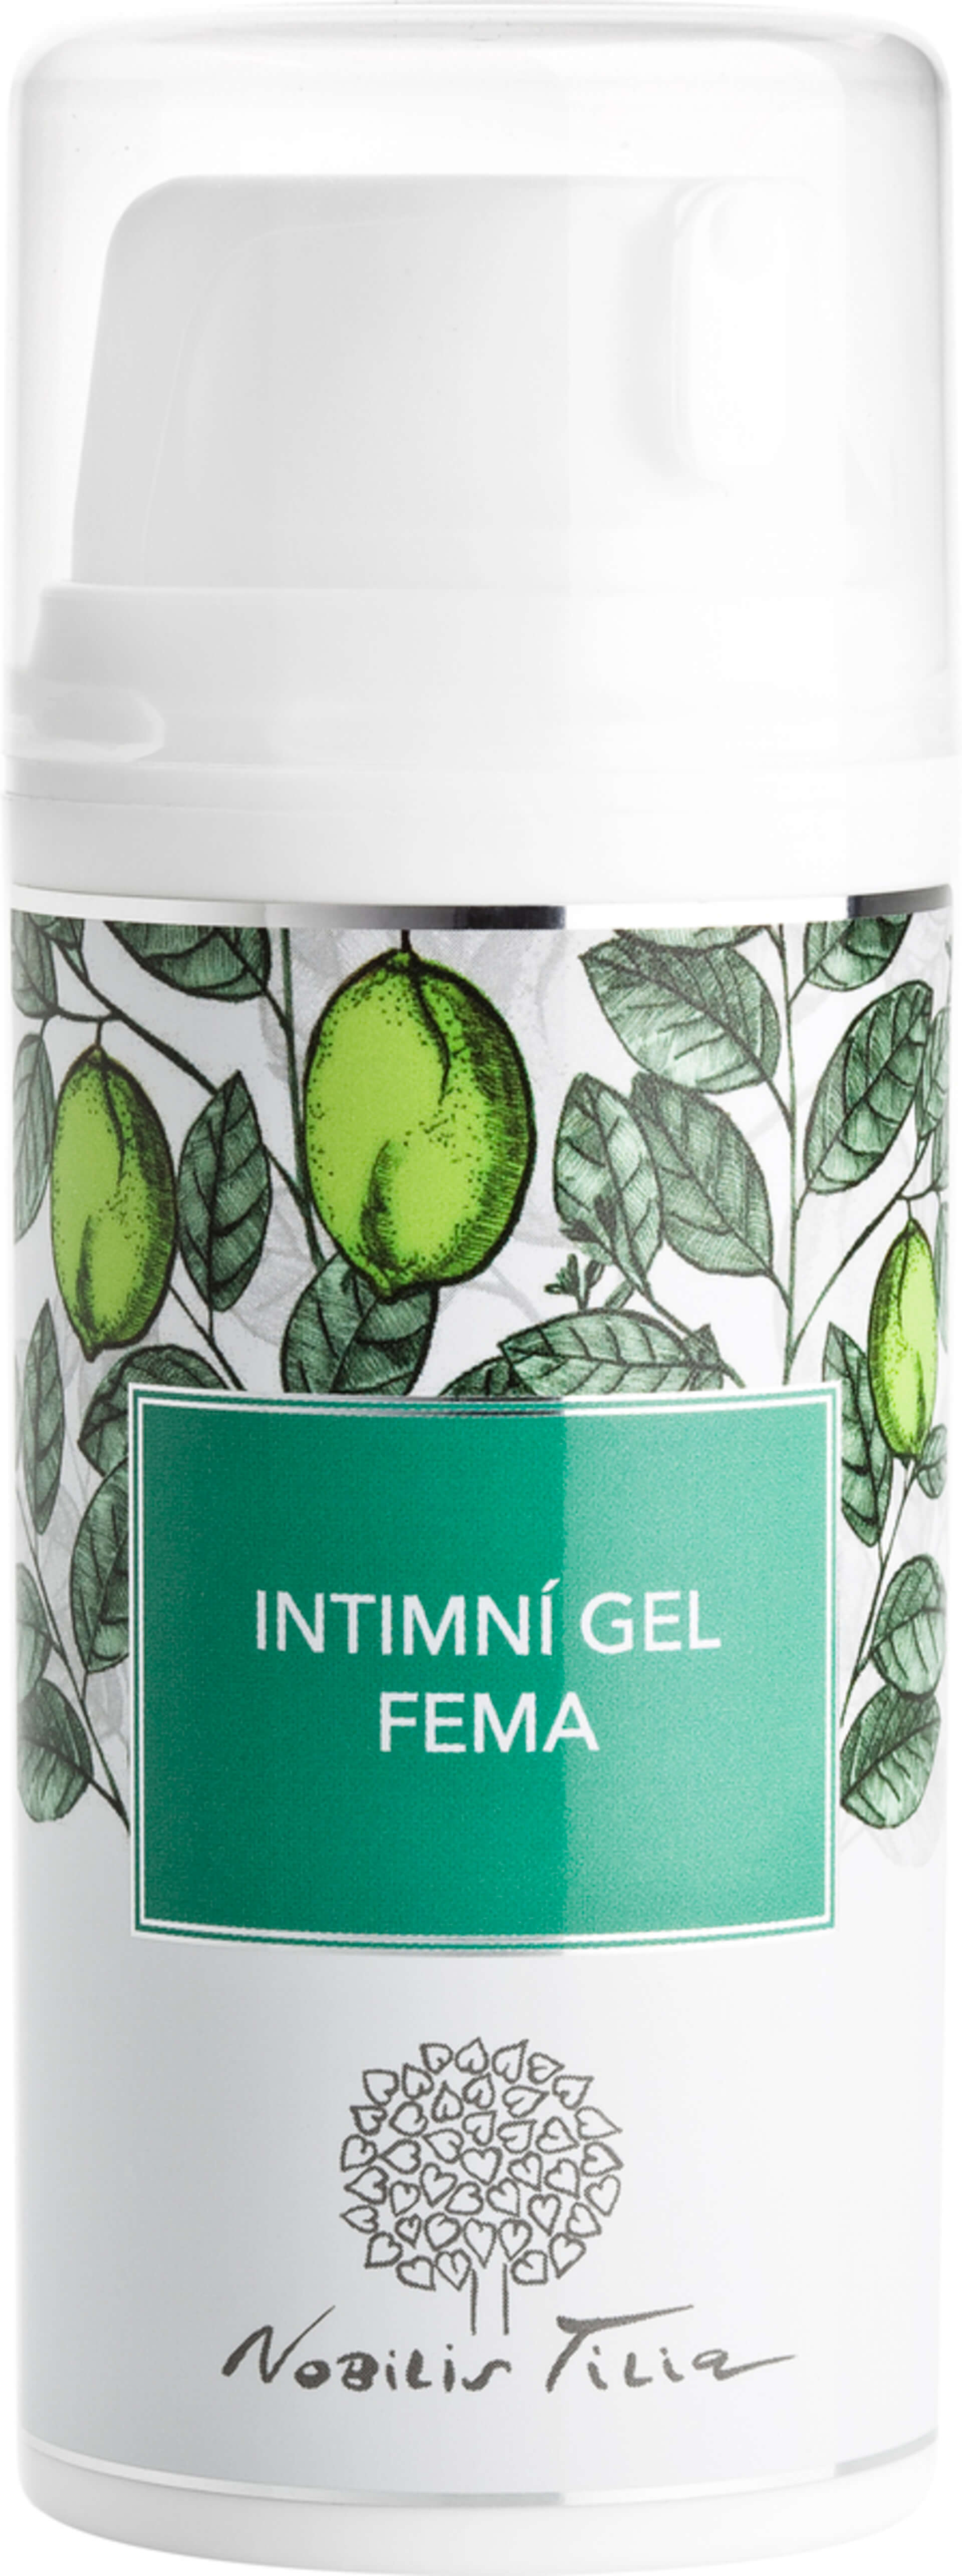 Nobilis Tilia Intimní gel Fema 100 ml